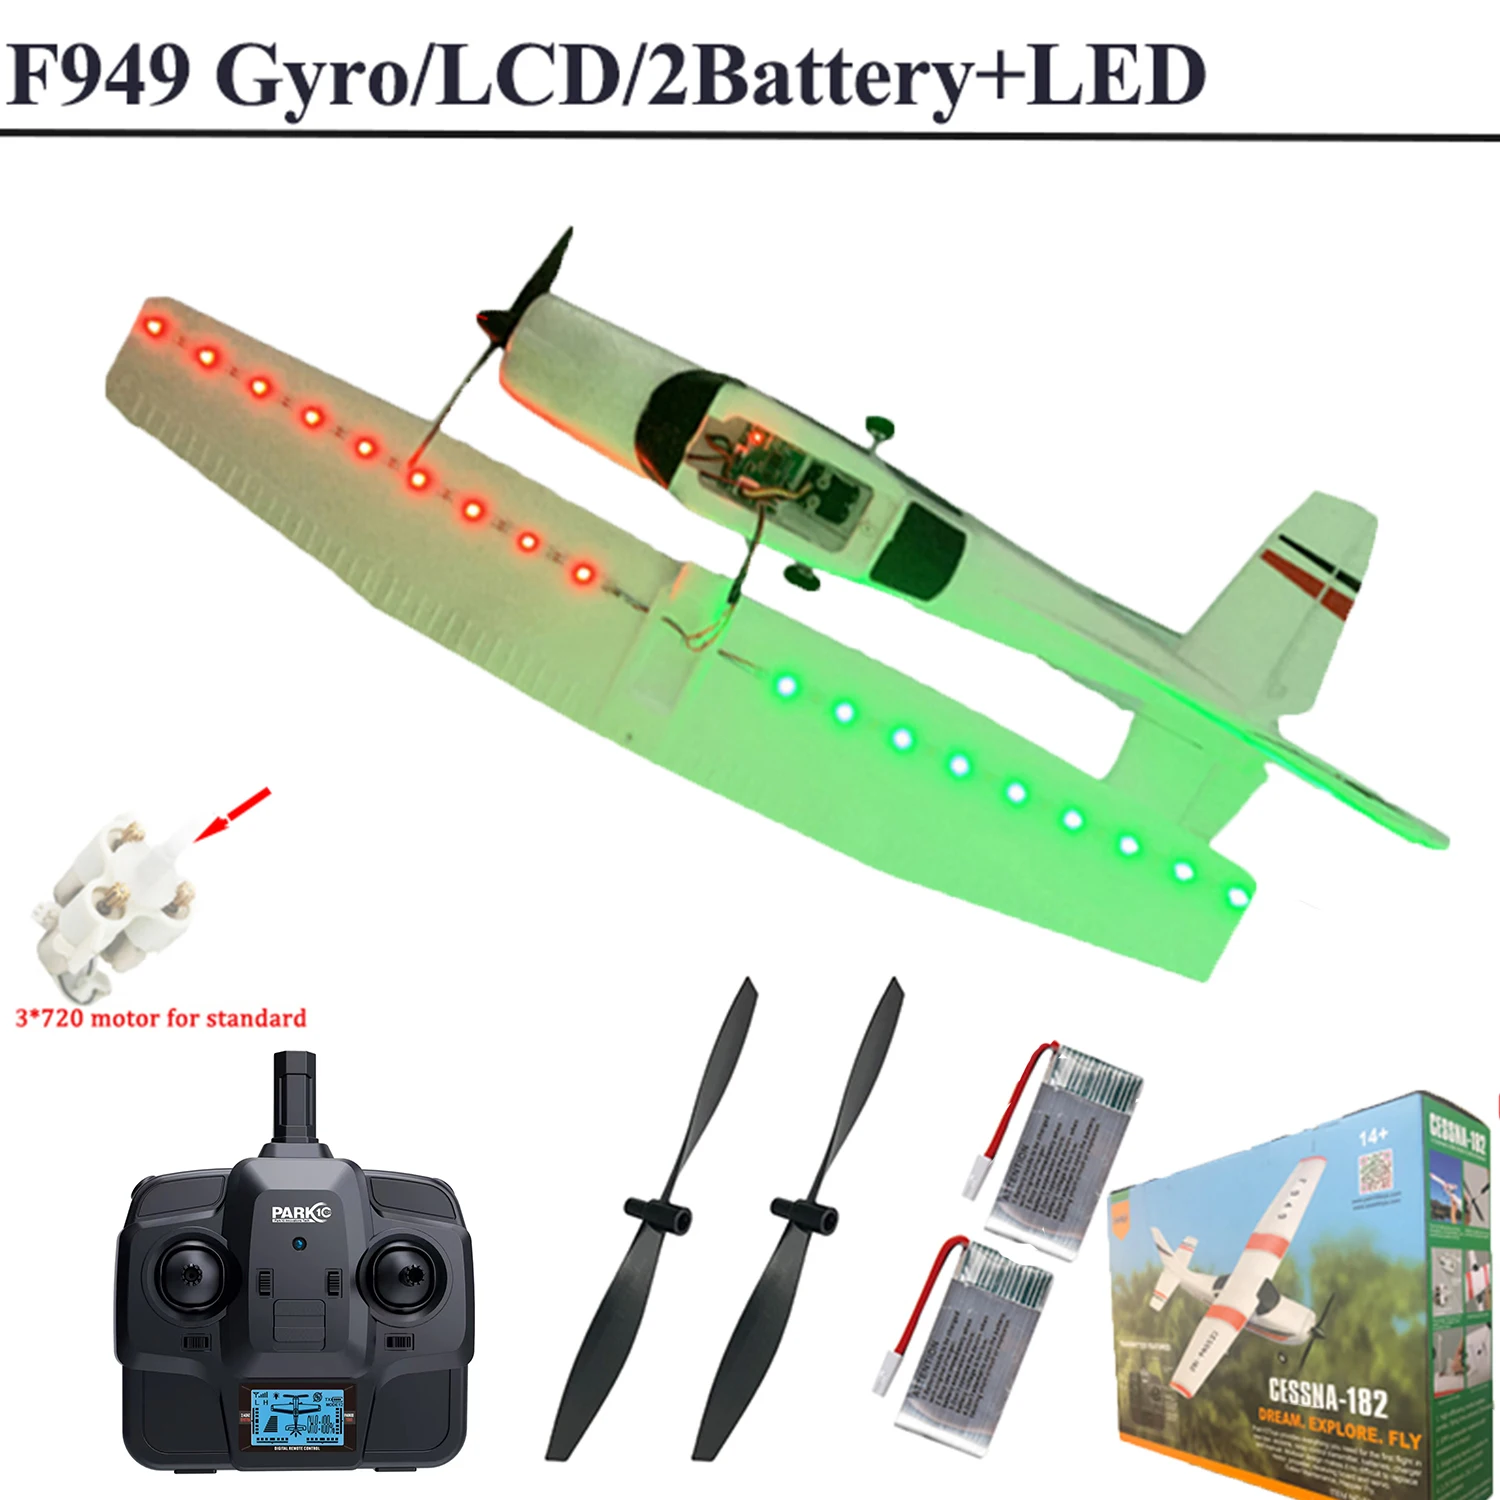 LCD Gyro 2B LED Box